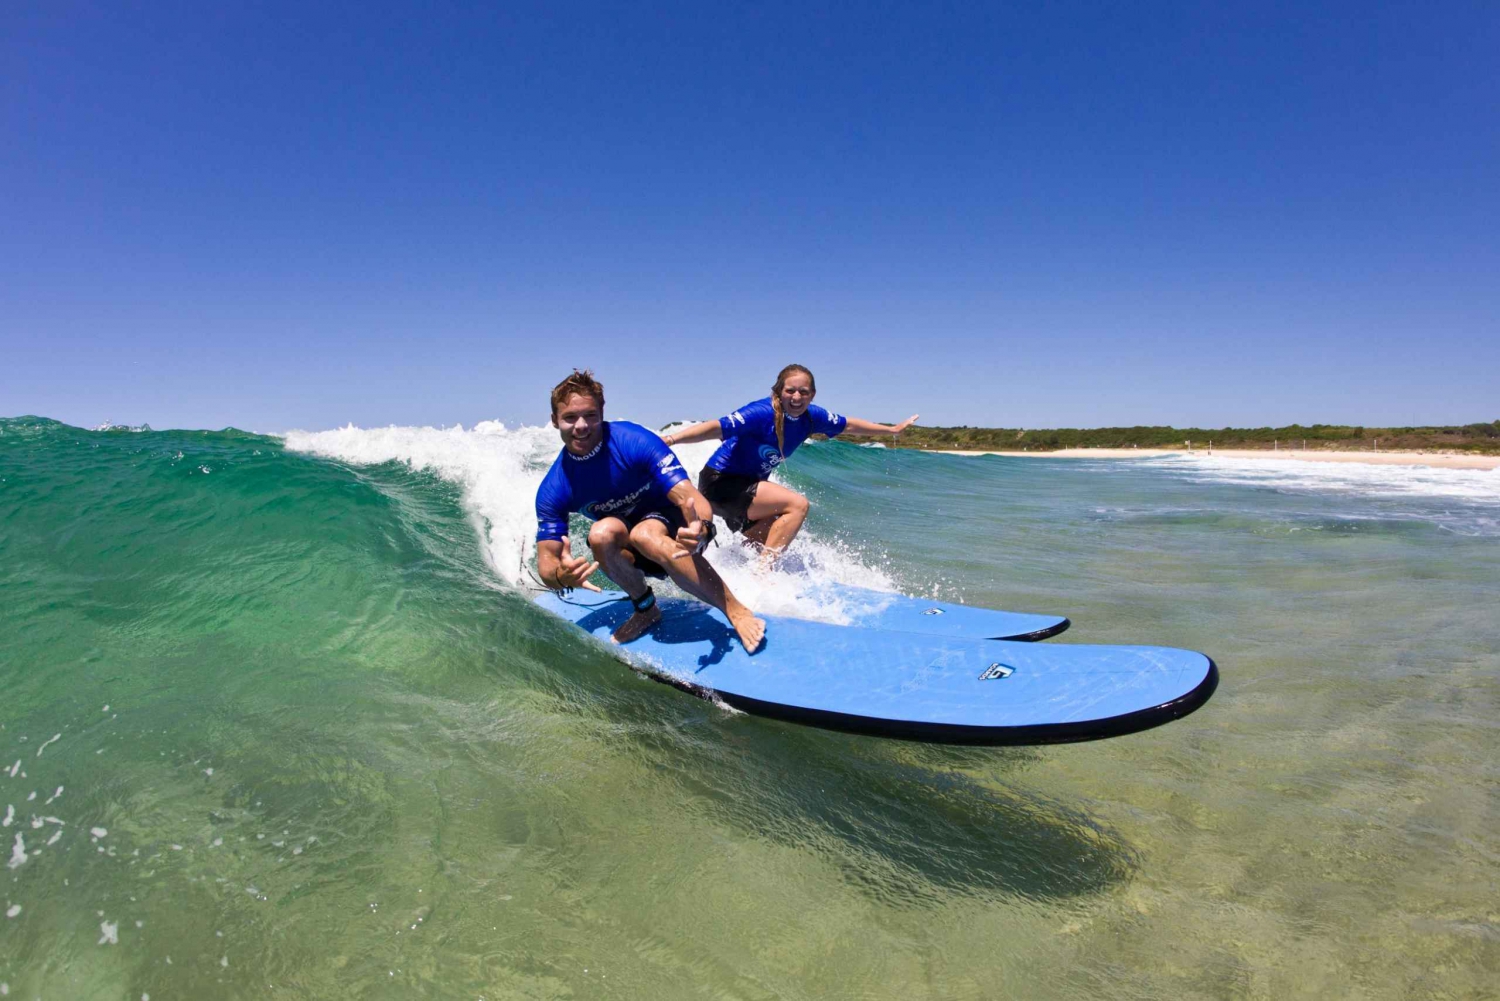 Sydney: Maroubra-surfles